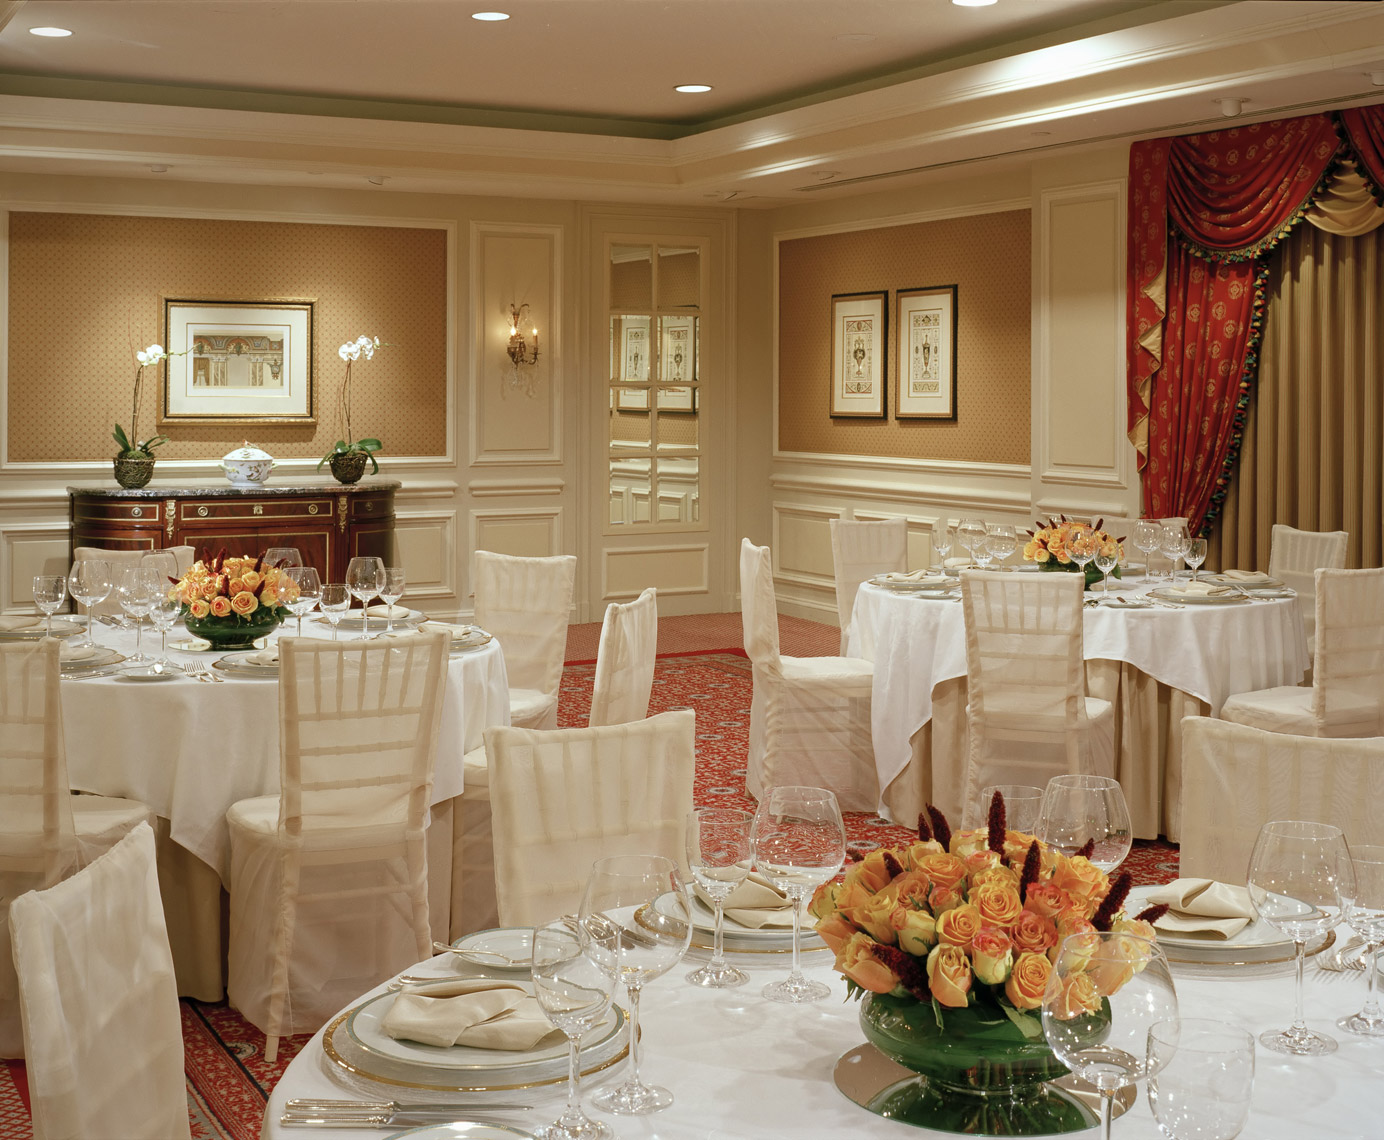 Classic Meeting Room, Interior Design by Kenneth E. Hurd & Associates